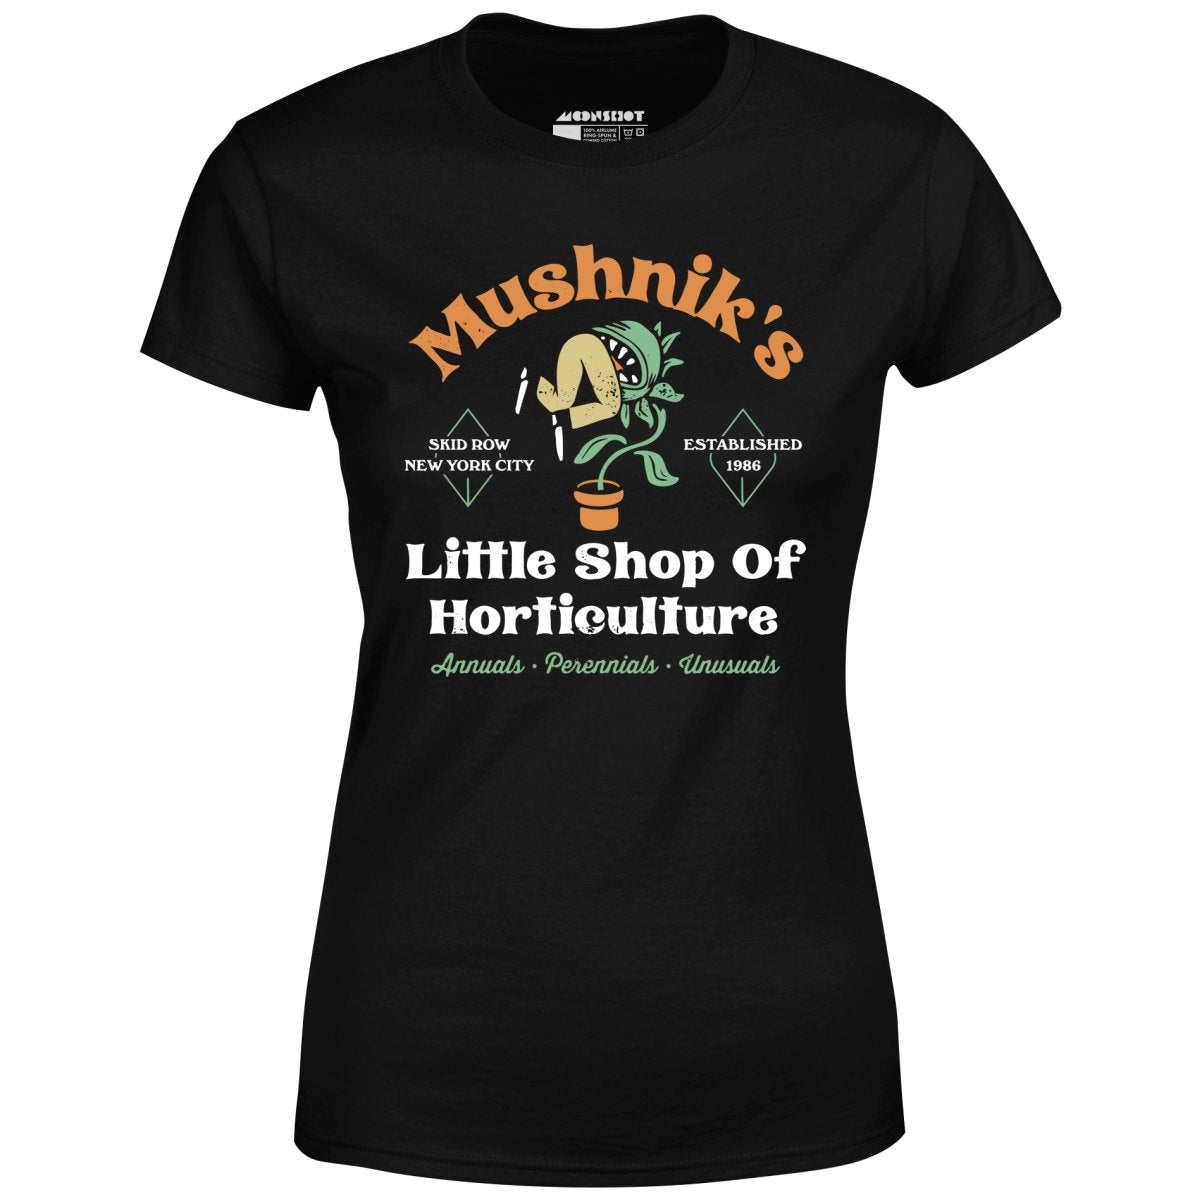 Mushnik's Little Shop of Horticulture - Women's T-Shirt